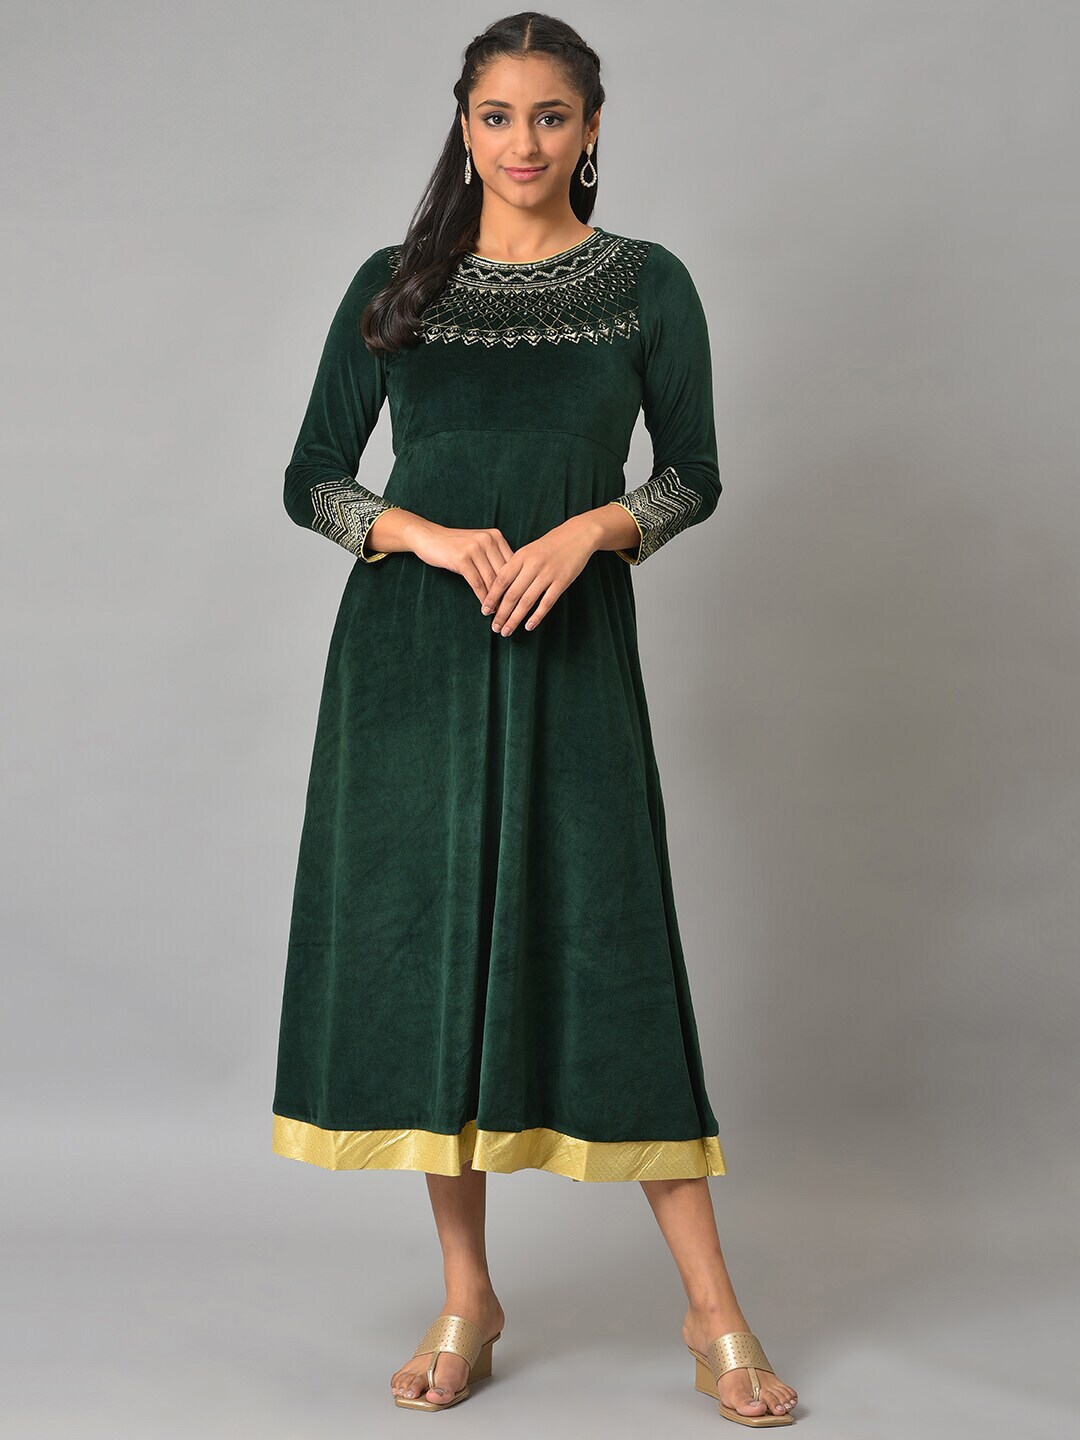 AURELIA Sequined Detailed A-Line Midi Dress Price in India